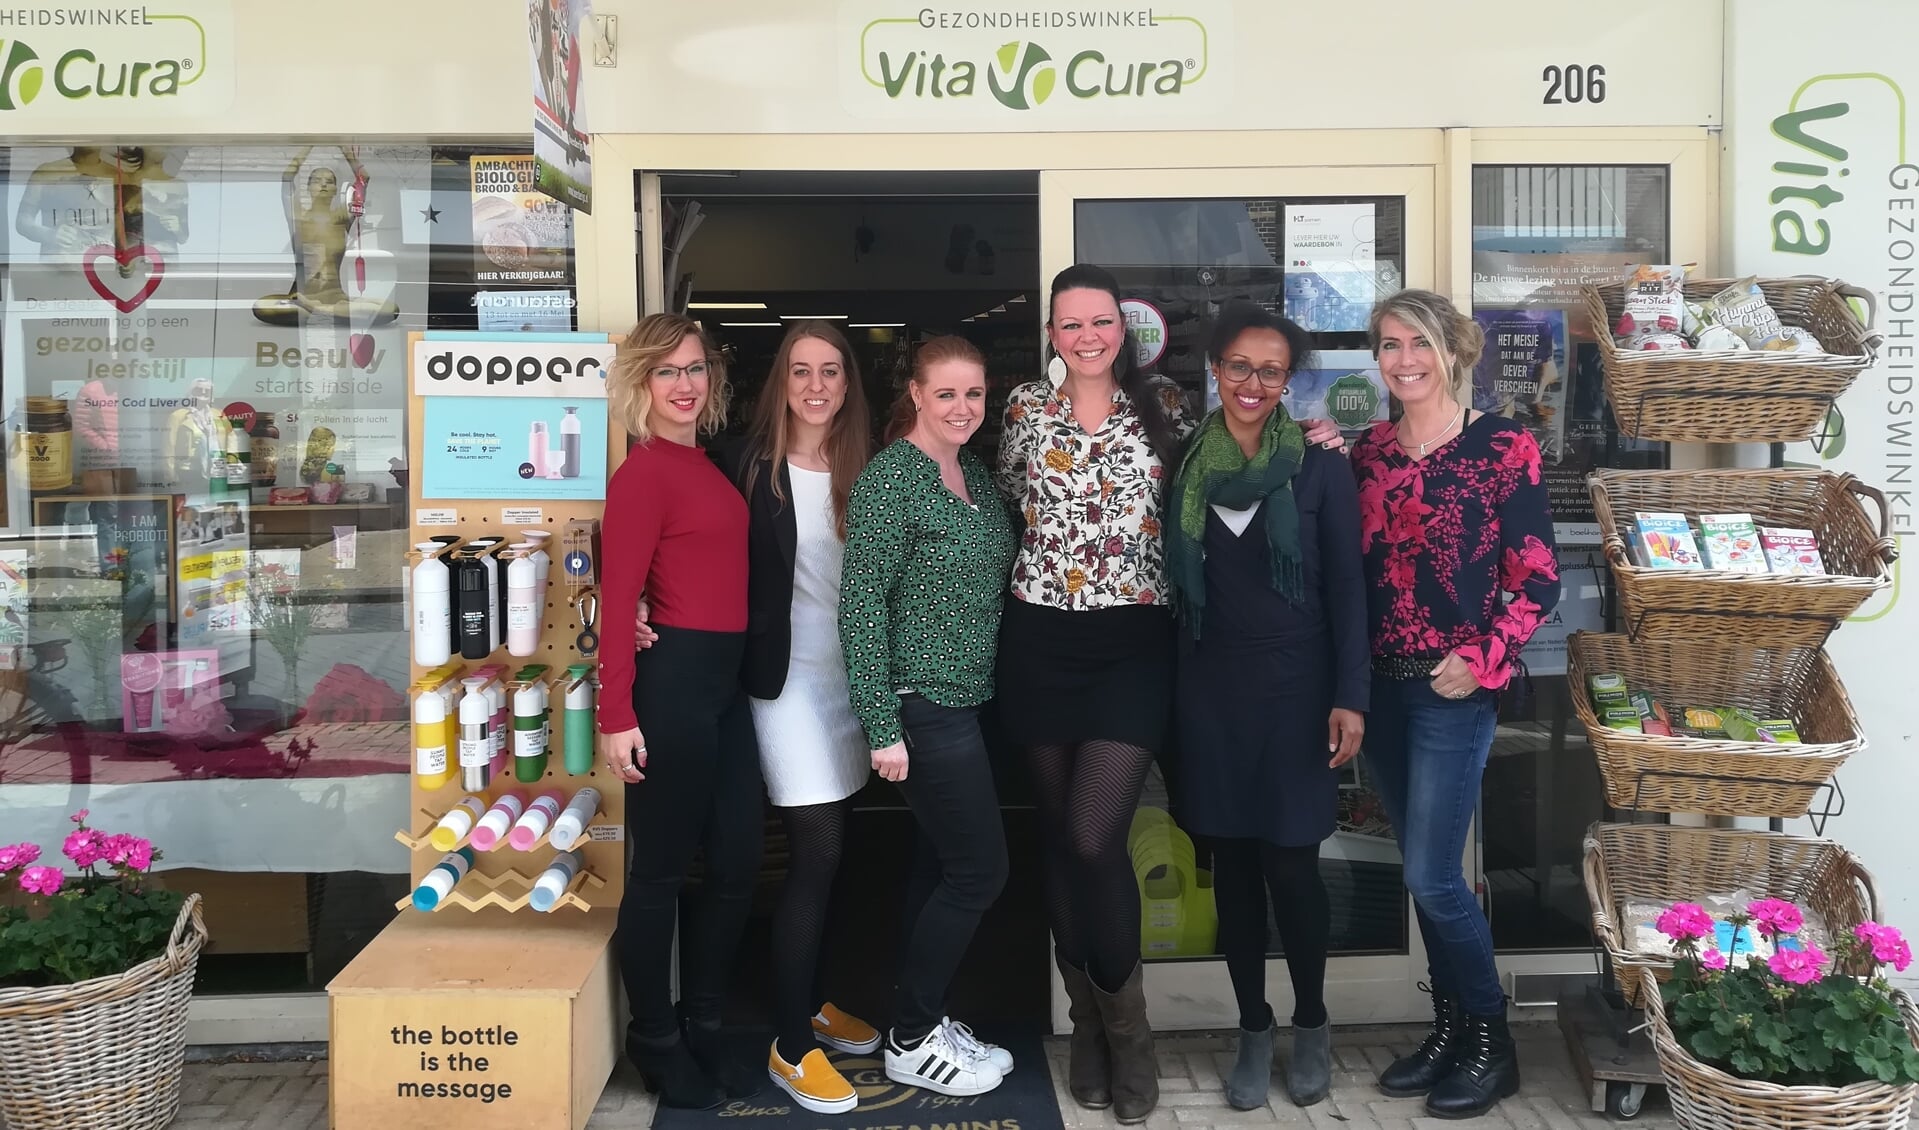 Het team van Vita Cura. | Foto: pr.